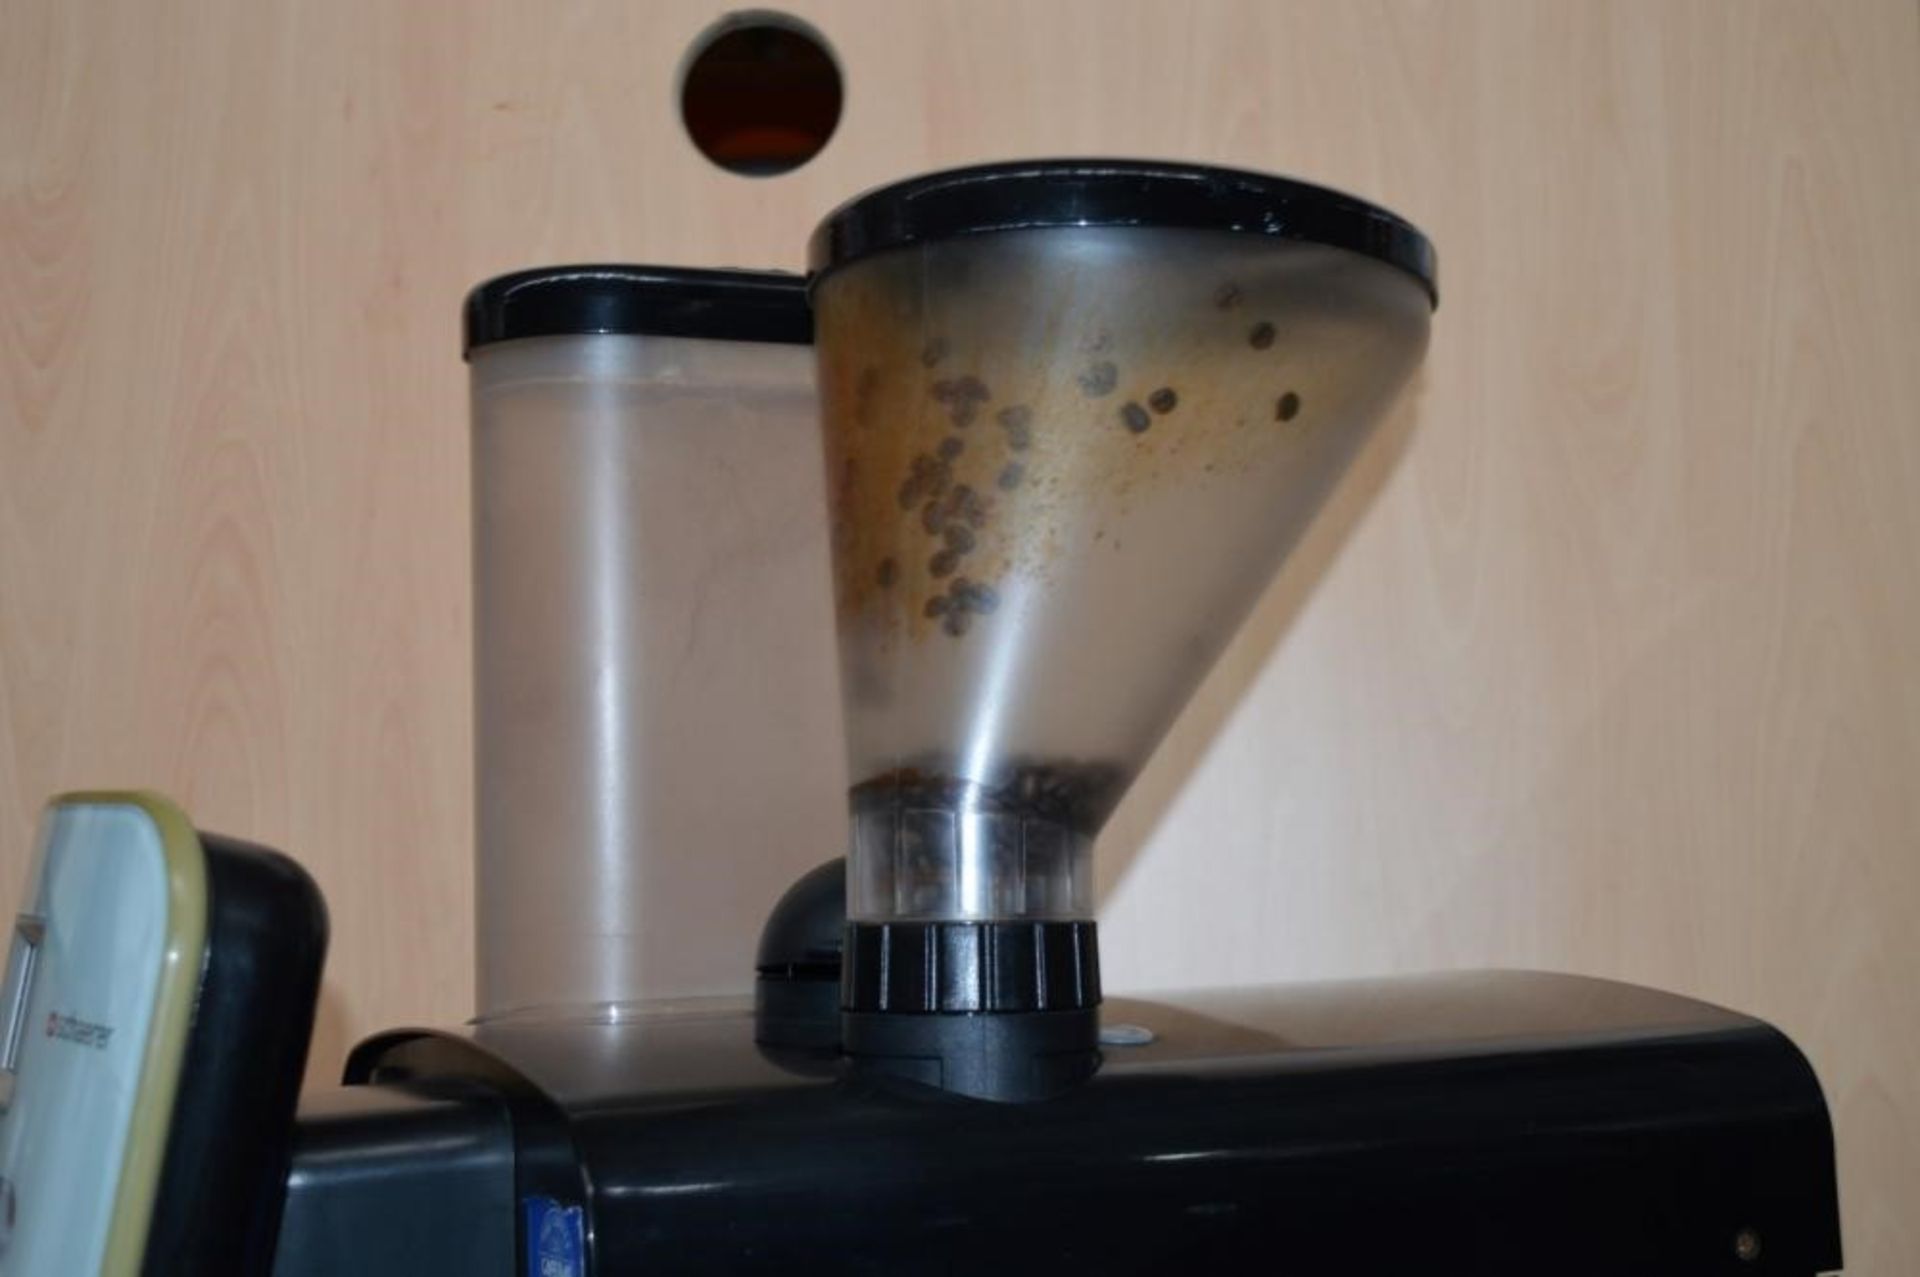 1 x Schaerer Vito Coffee Espresso Hot Chocolate Bean To Cup Hot Drinks Machine - Includes Vitrifrigo - Image 5 of 12